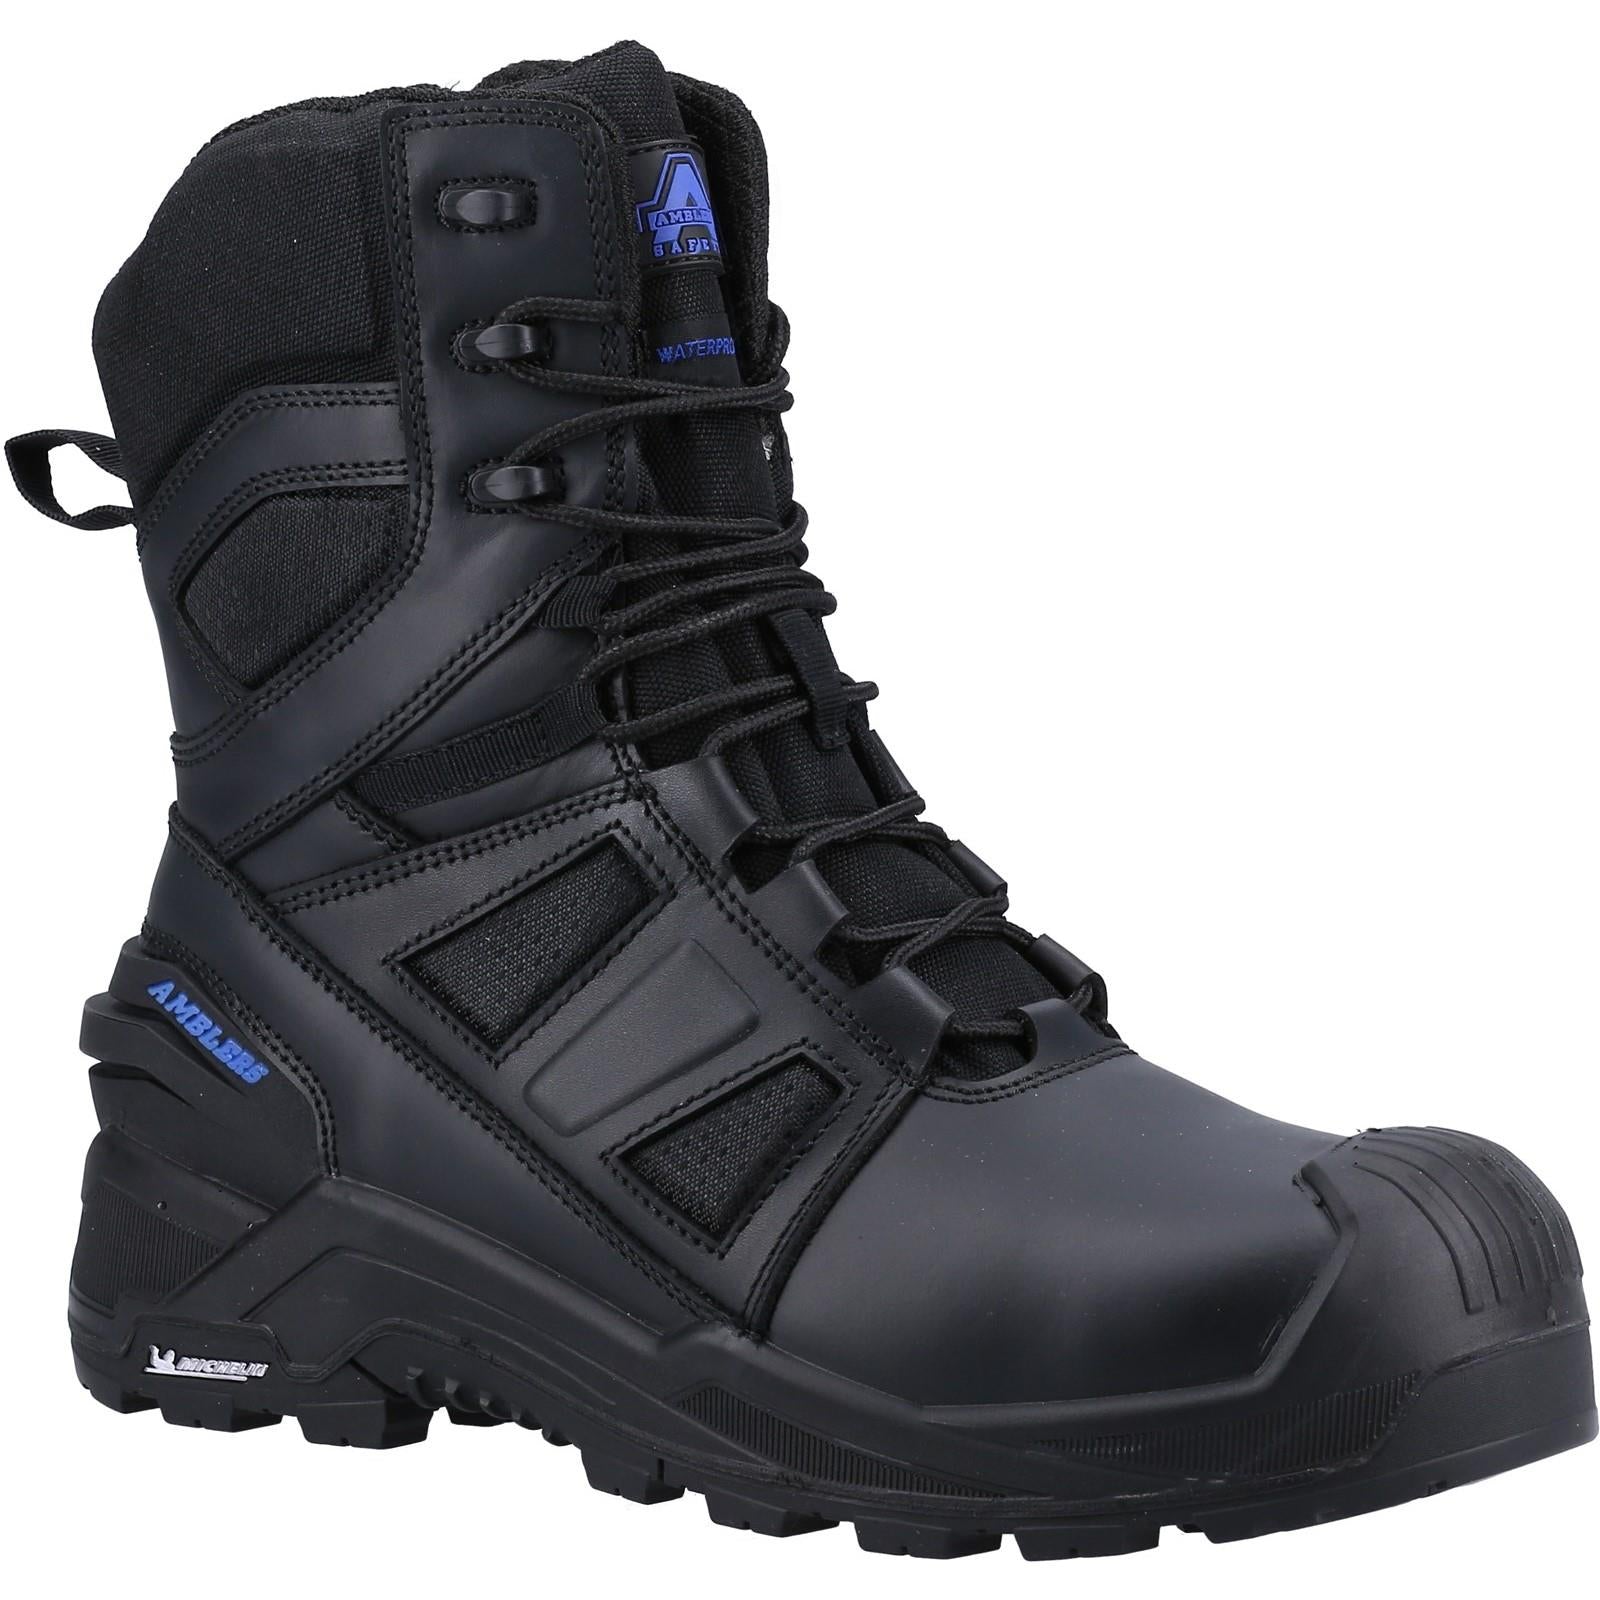 Amblers Centurion S3 composite toe waterproof hi leg work safety boots #AS981C